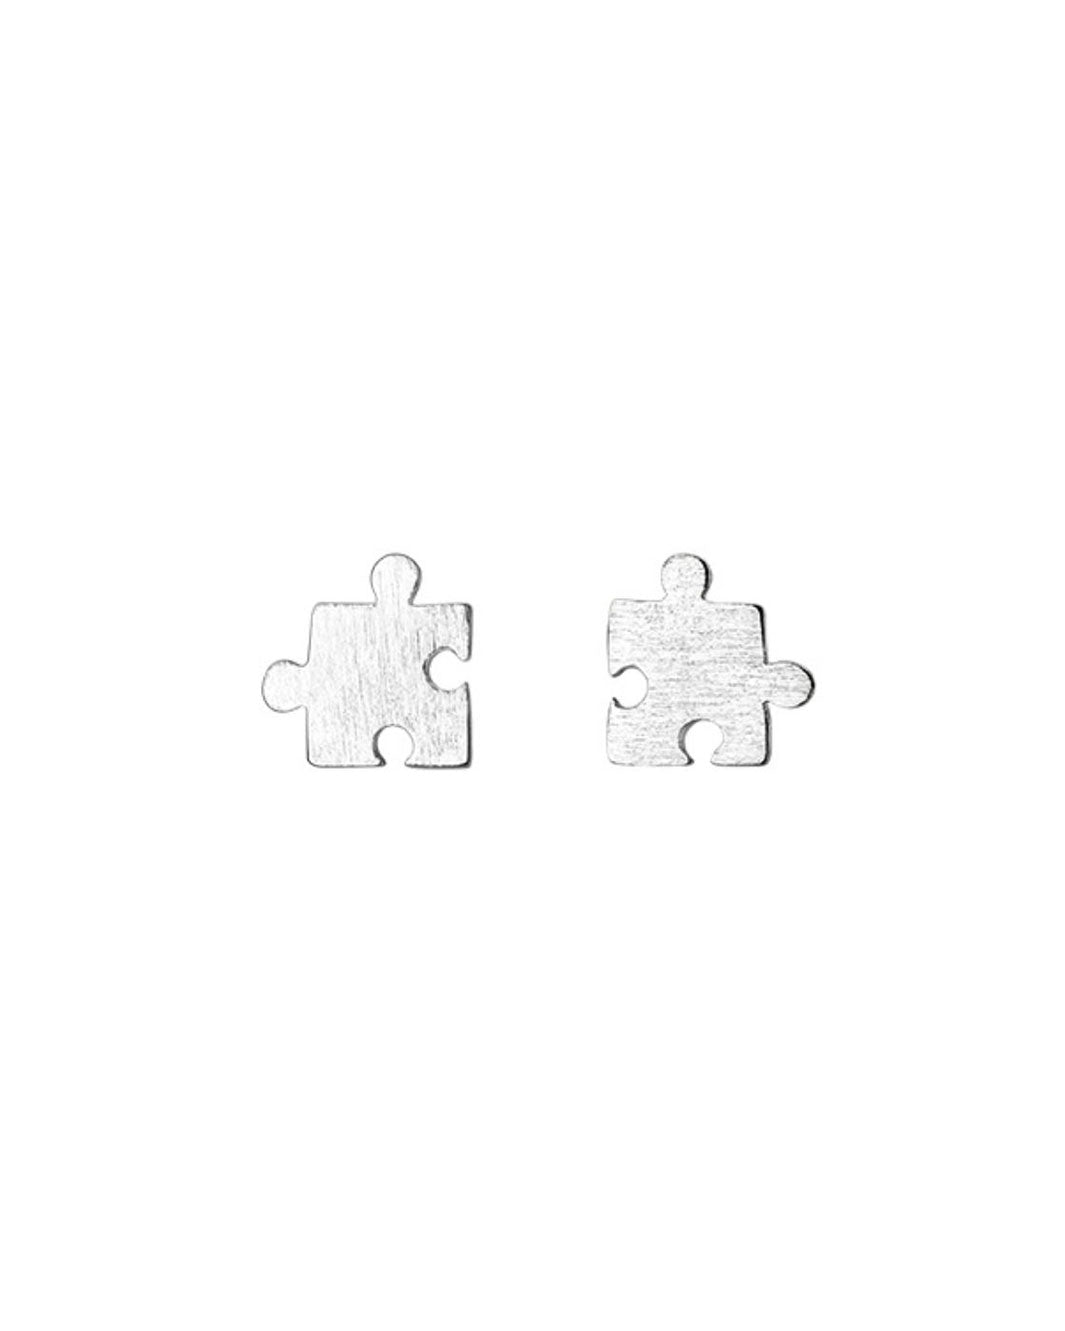 Matte Puzzle Pieces Stud Earrings